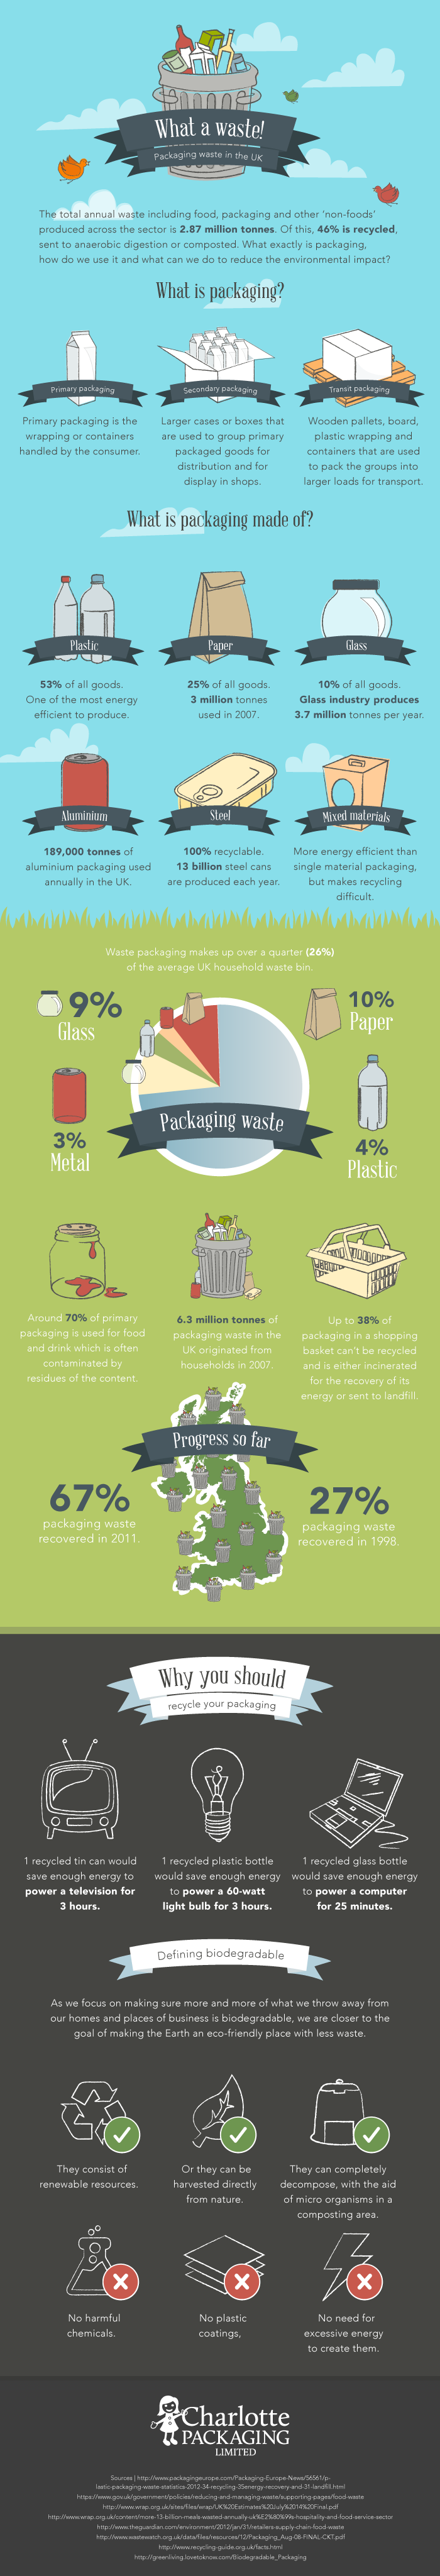 Packaging waste in the UK 